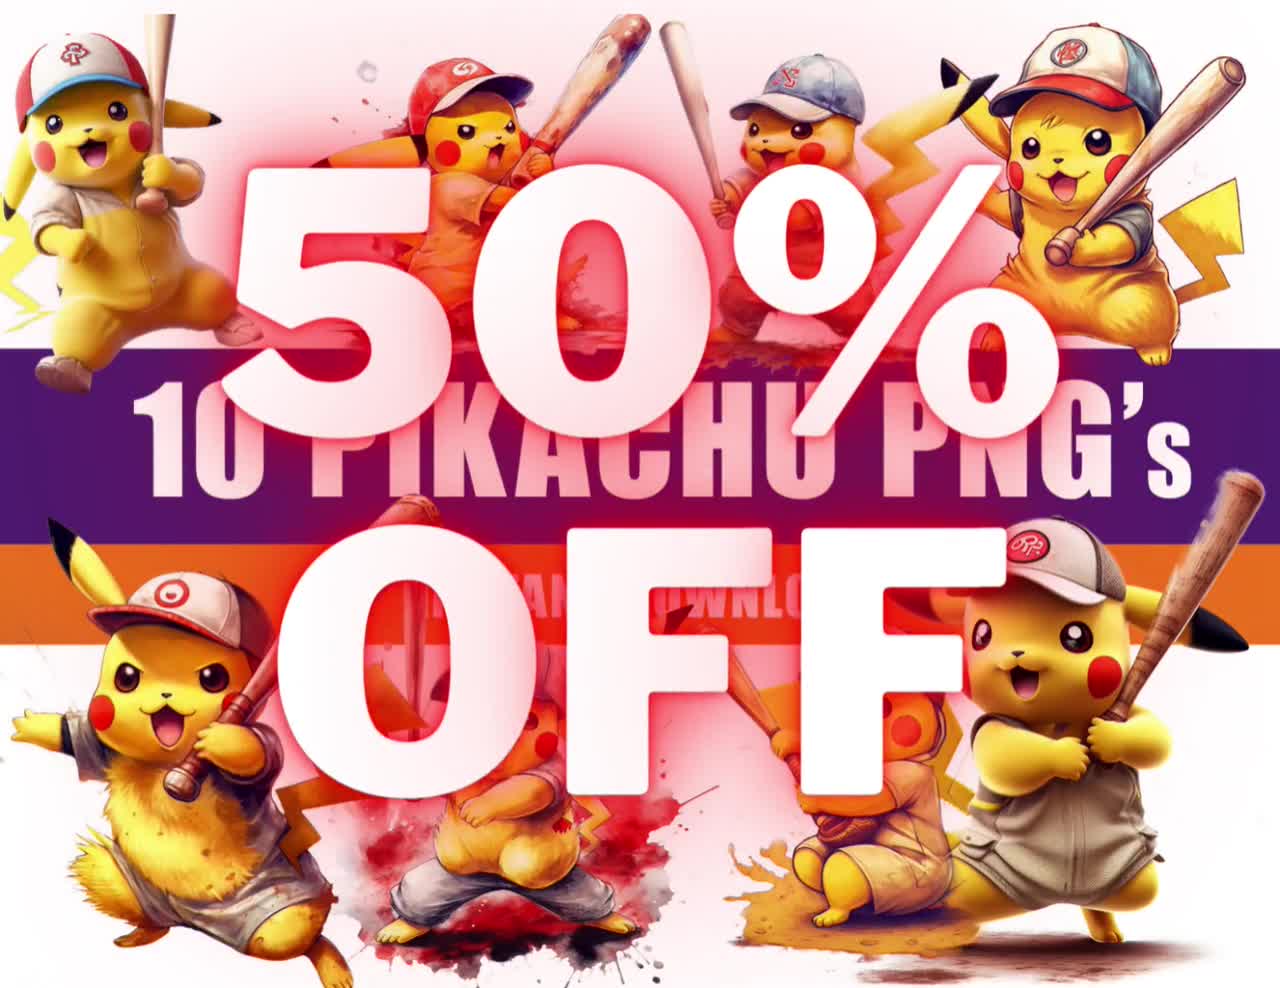 Pikachu PNG Transparent Images - PNG All